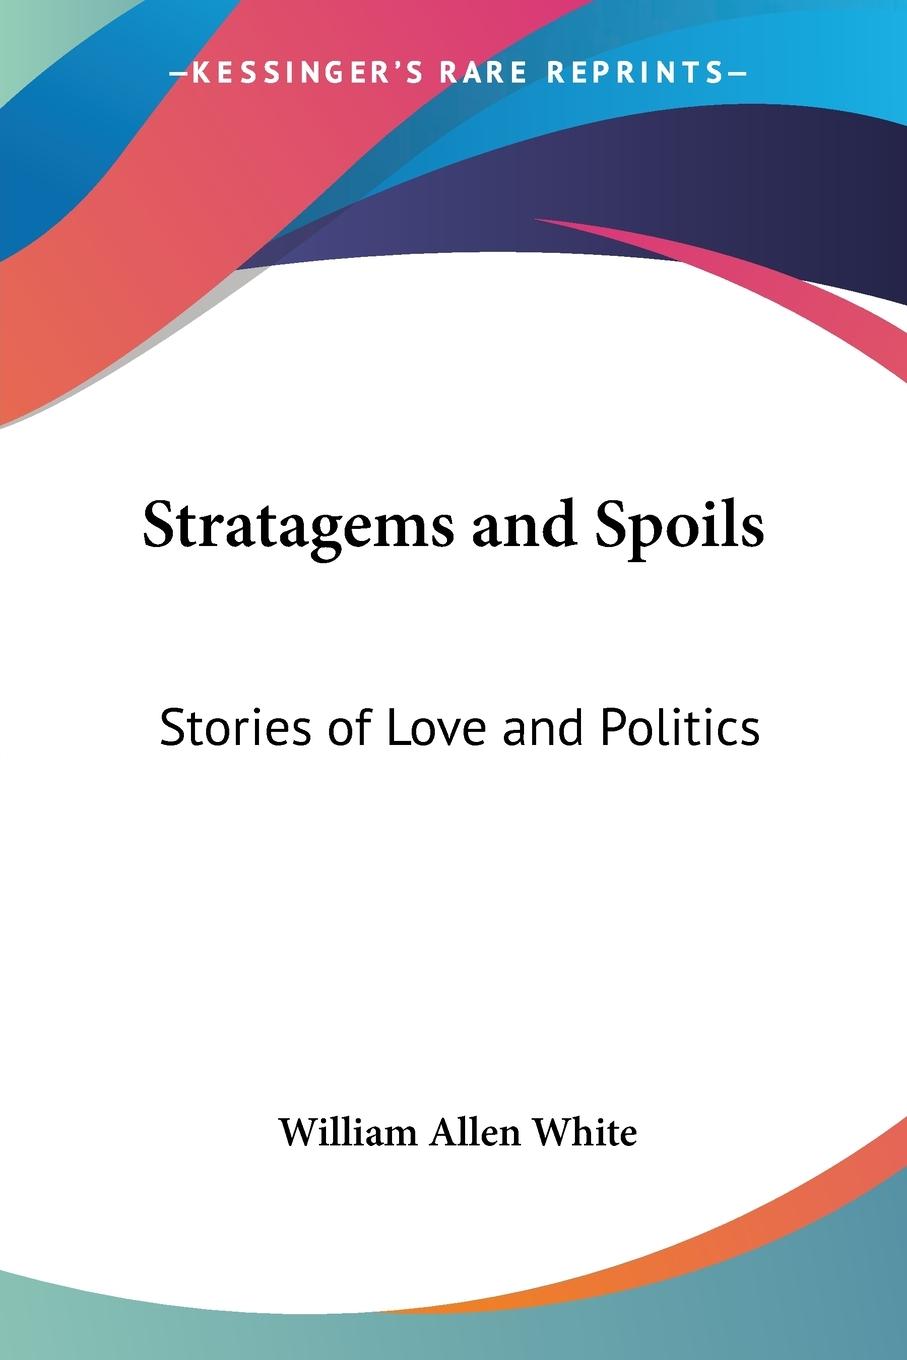 Stratagems and Spoils - White, William Allen